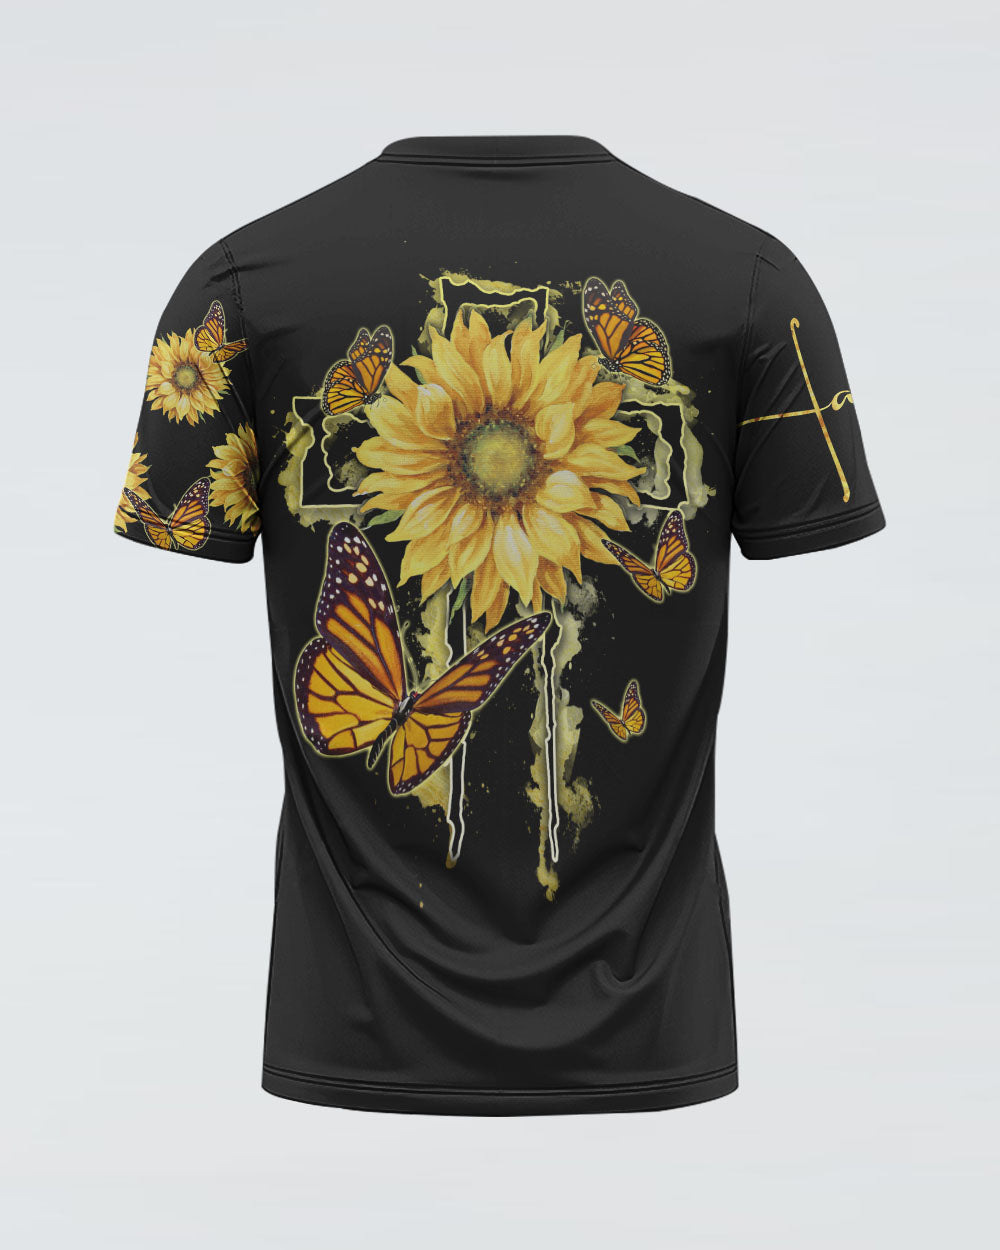 Sunflower Butterfly Women's Christian Tshirt